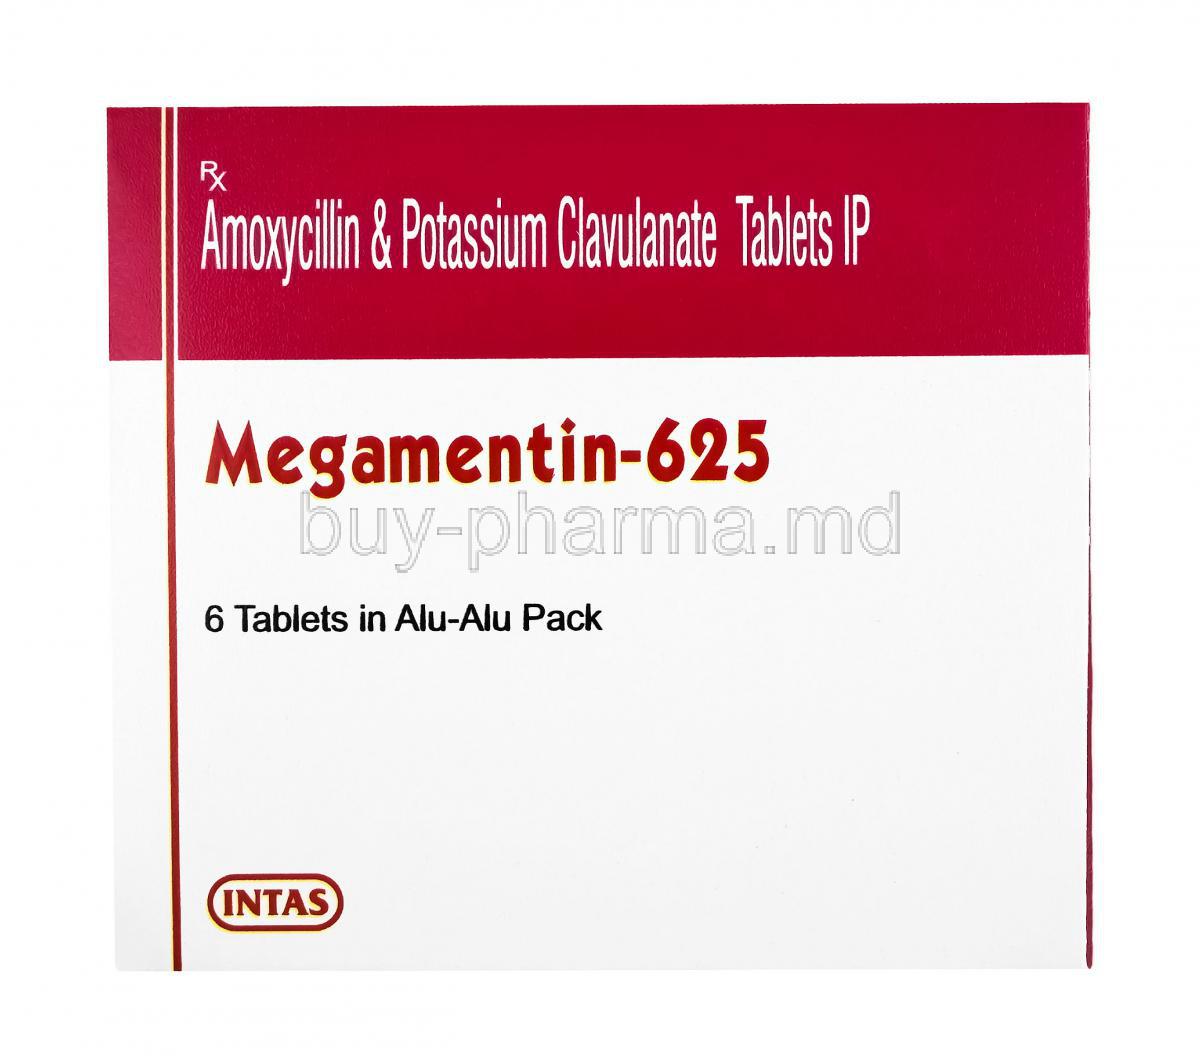 Megamentin, Amoxicillin and Clavulanic Acid